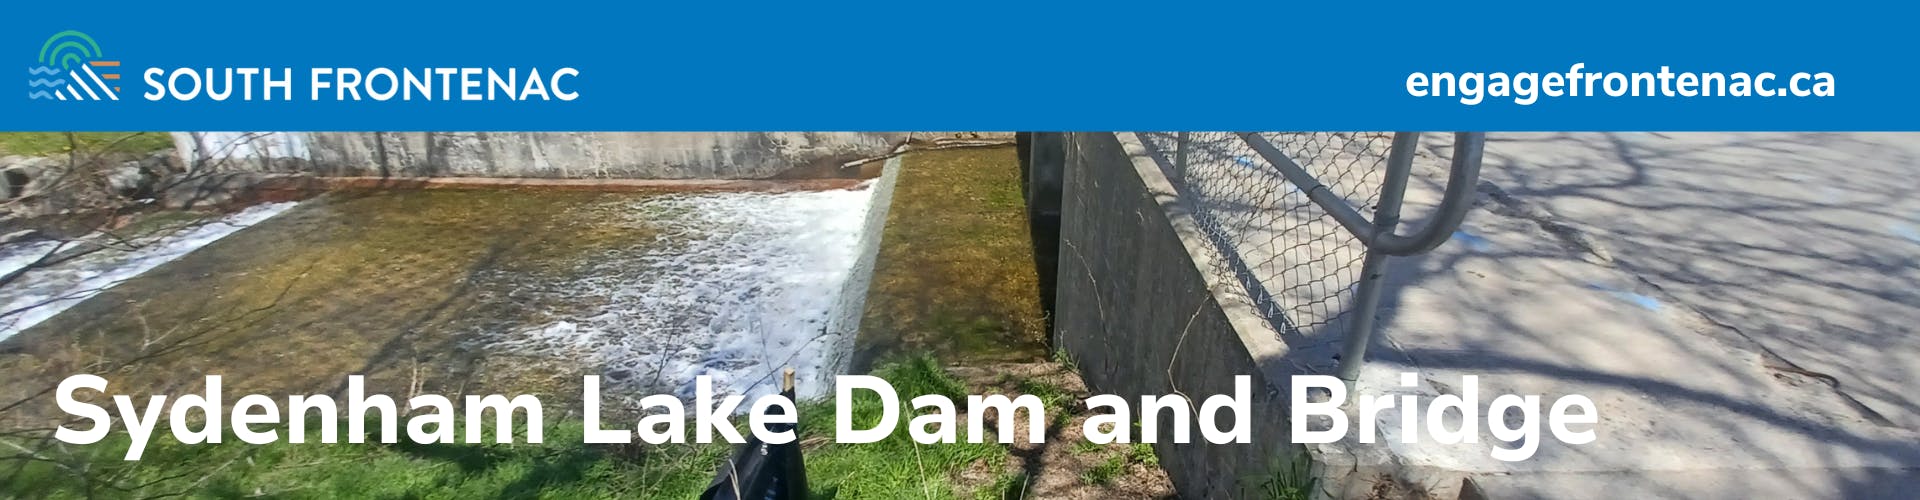 Sydenham Lake dam and bridge